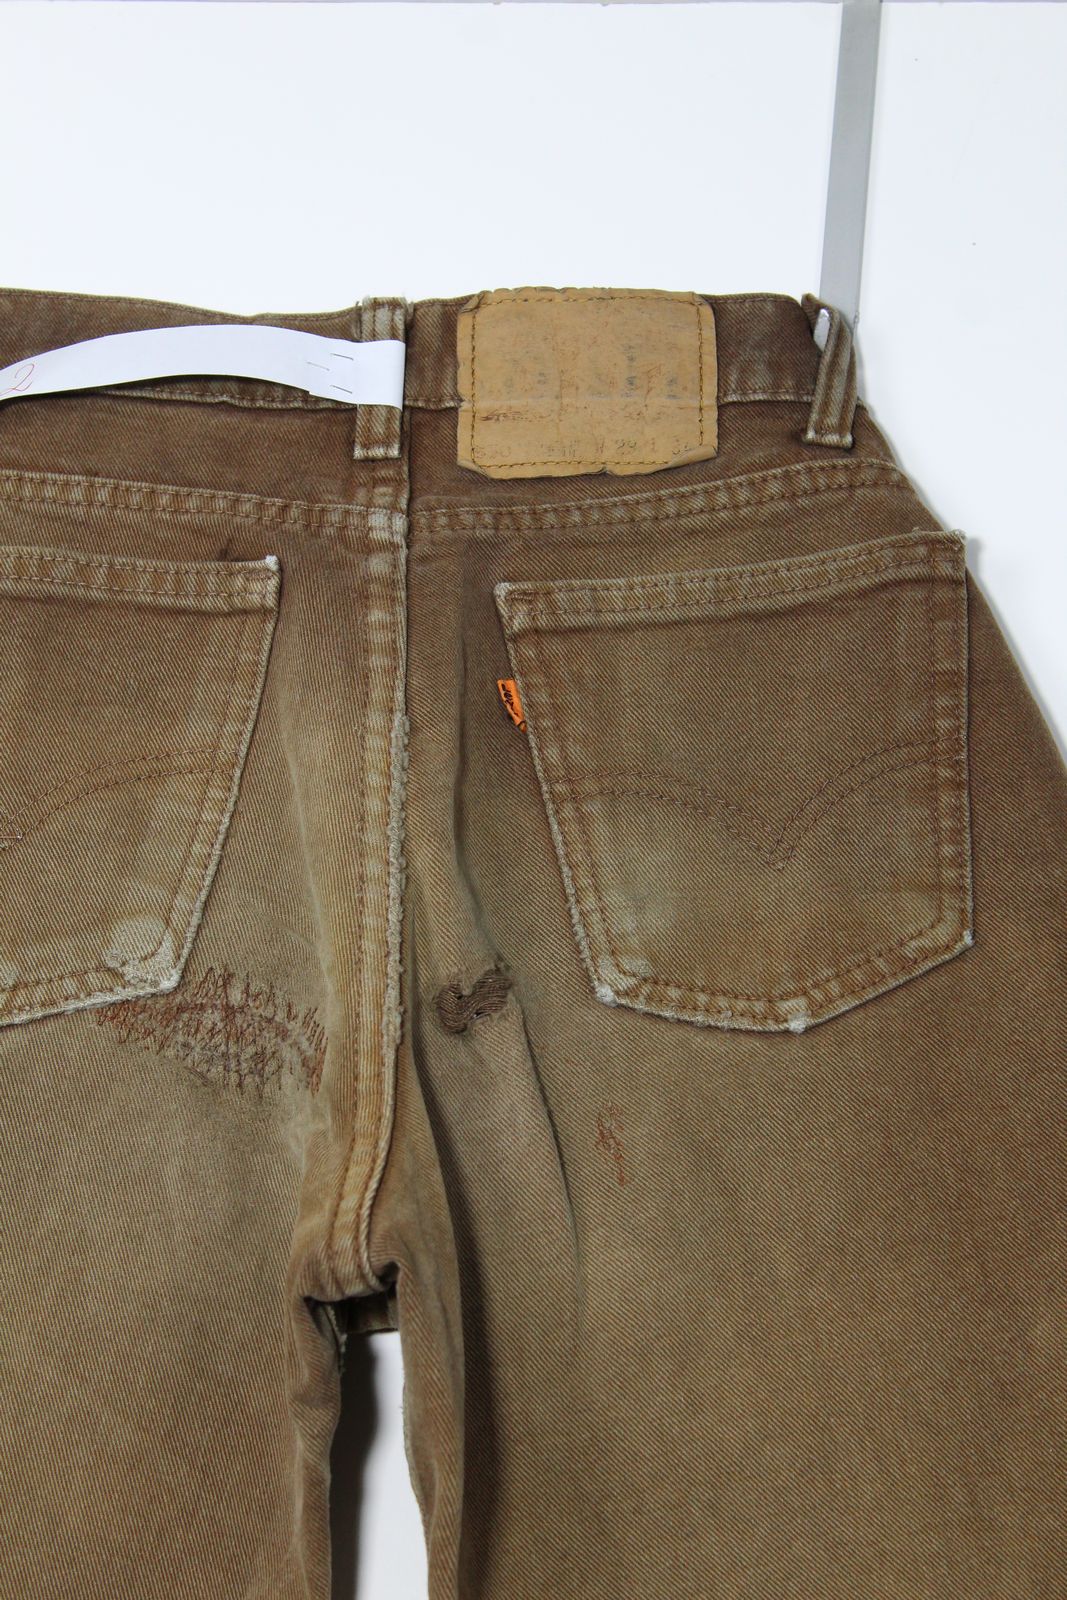 Levi's 550 Orange Tab W29 L34 Made In USA Jeans Vintage